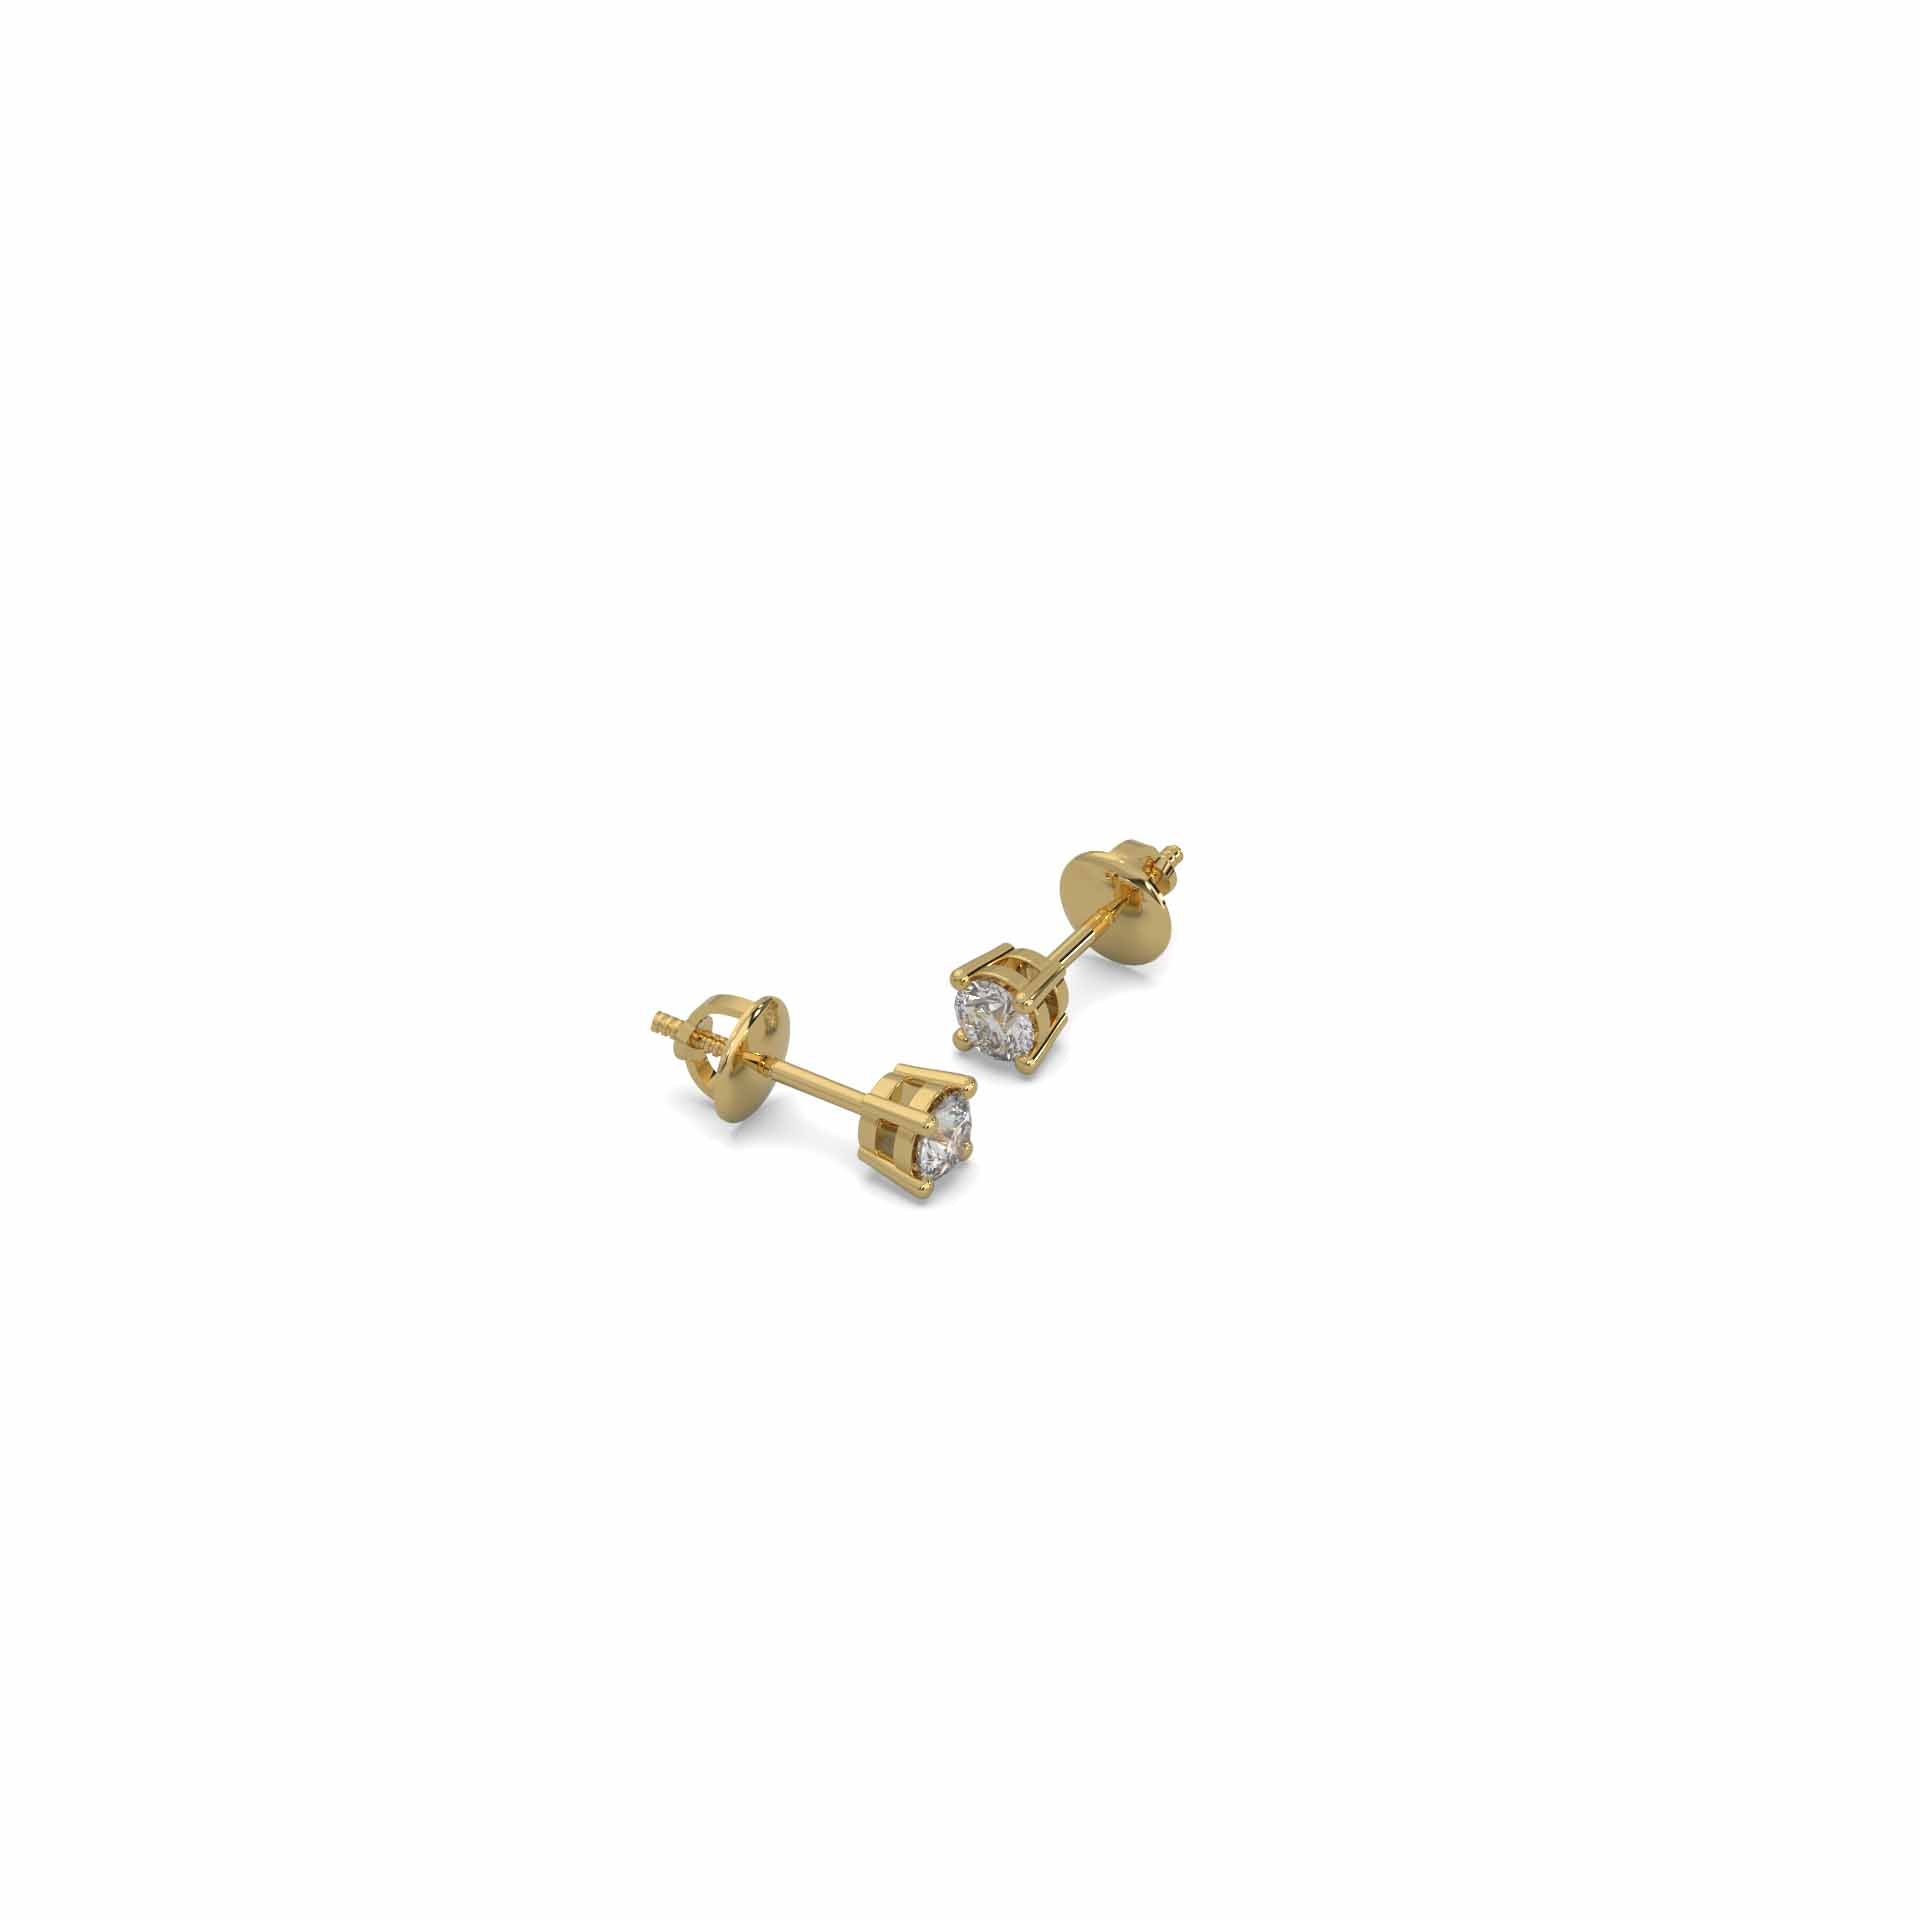 Sunburst Stud Earrings with Diamonds and Milgrain in 18K Yellow Gold - Kwiat